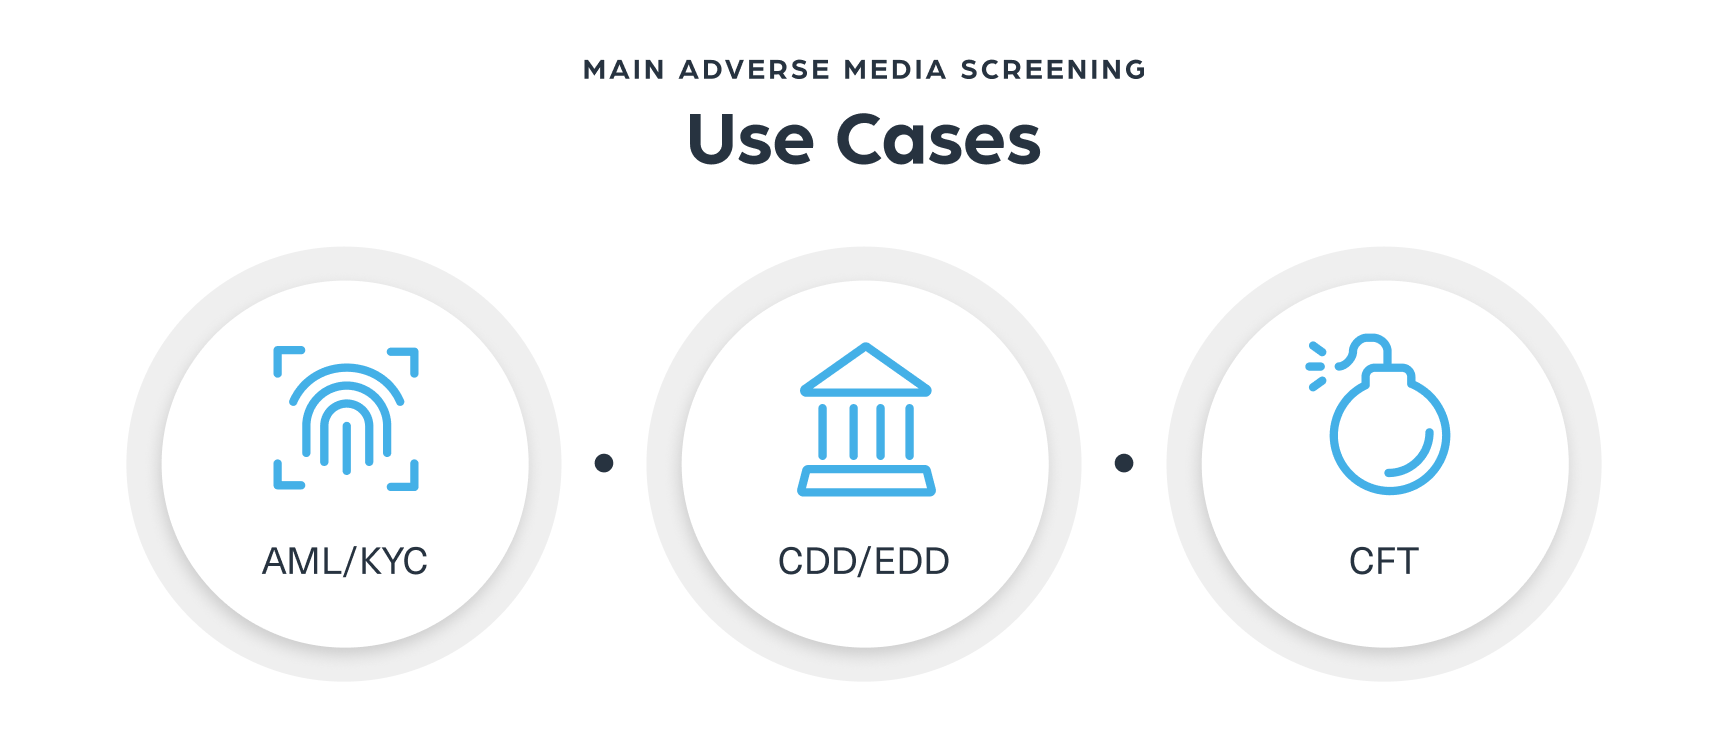 Main adverse media screening use cases